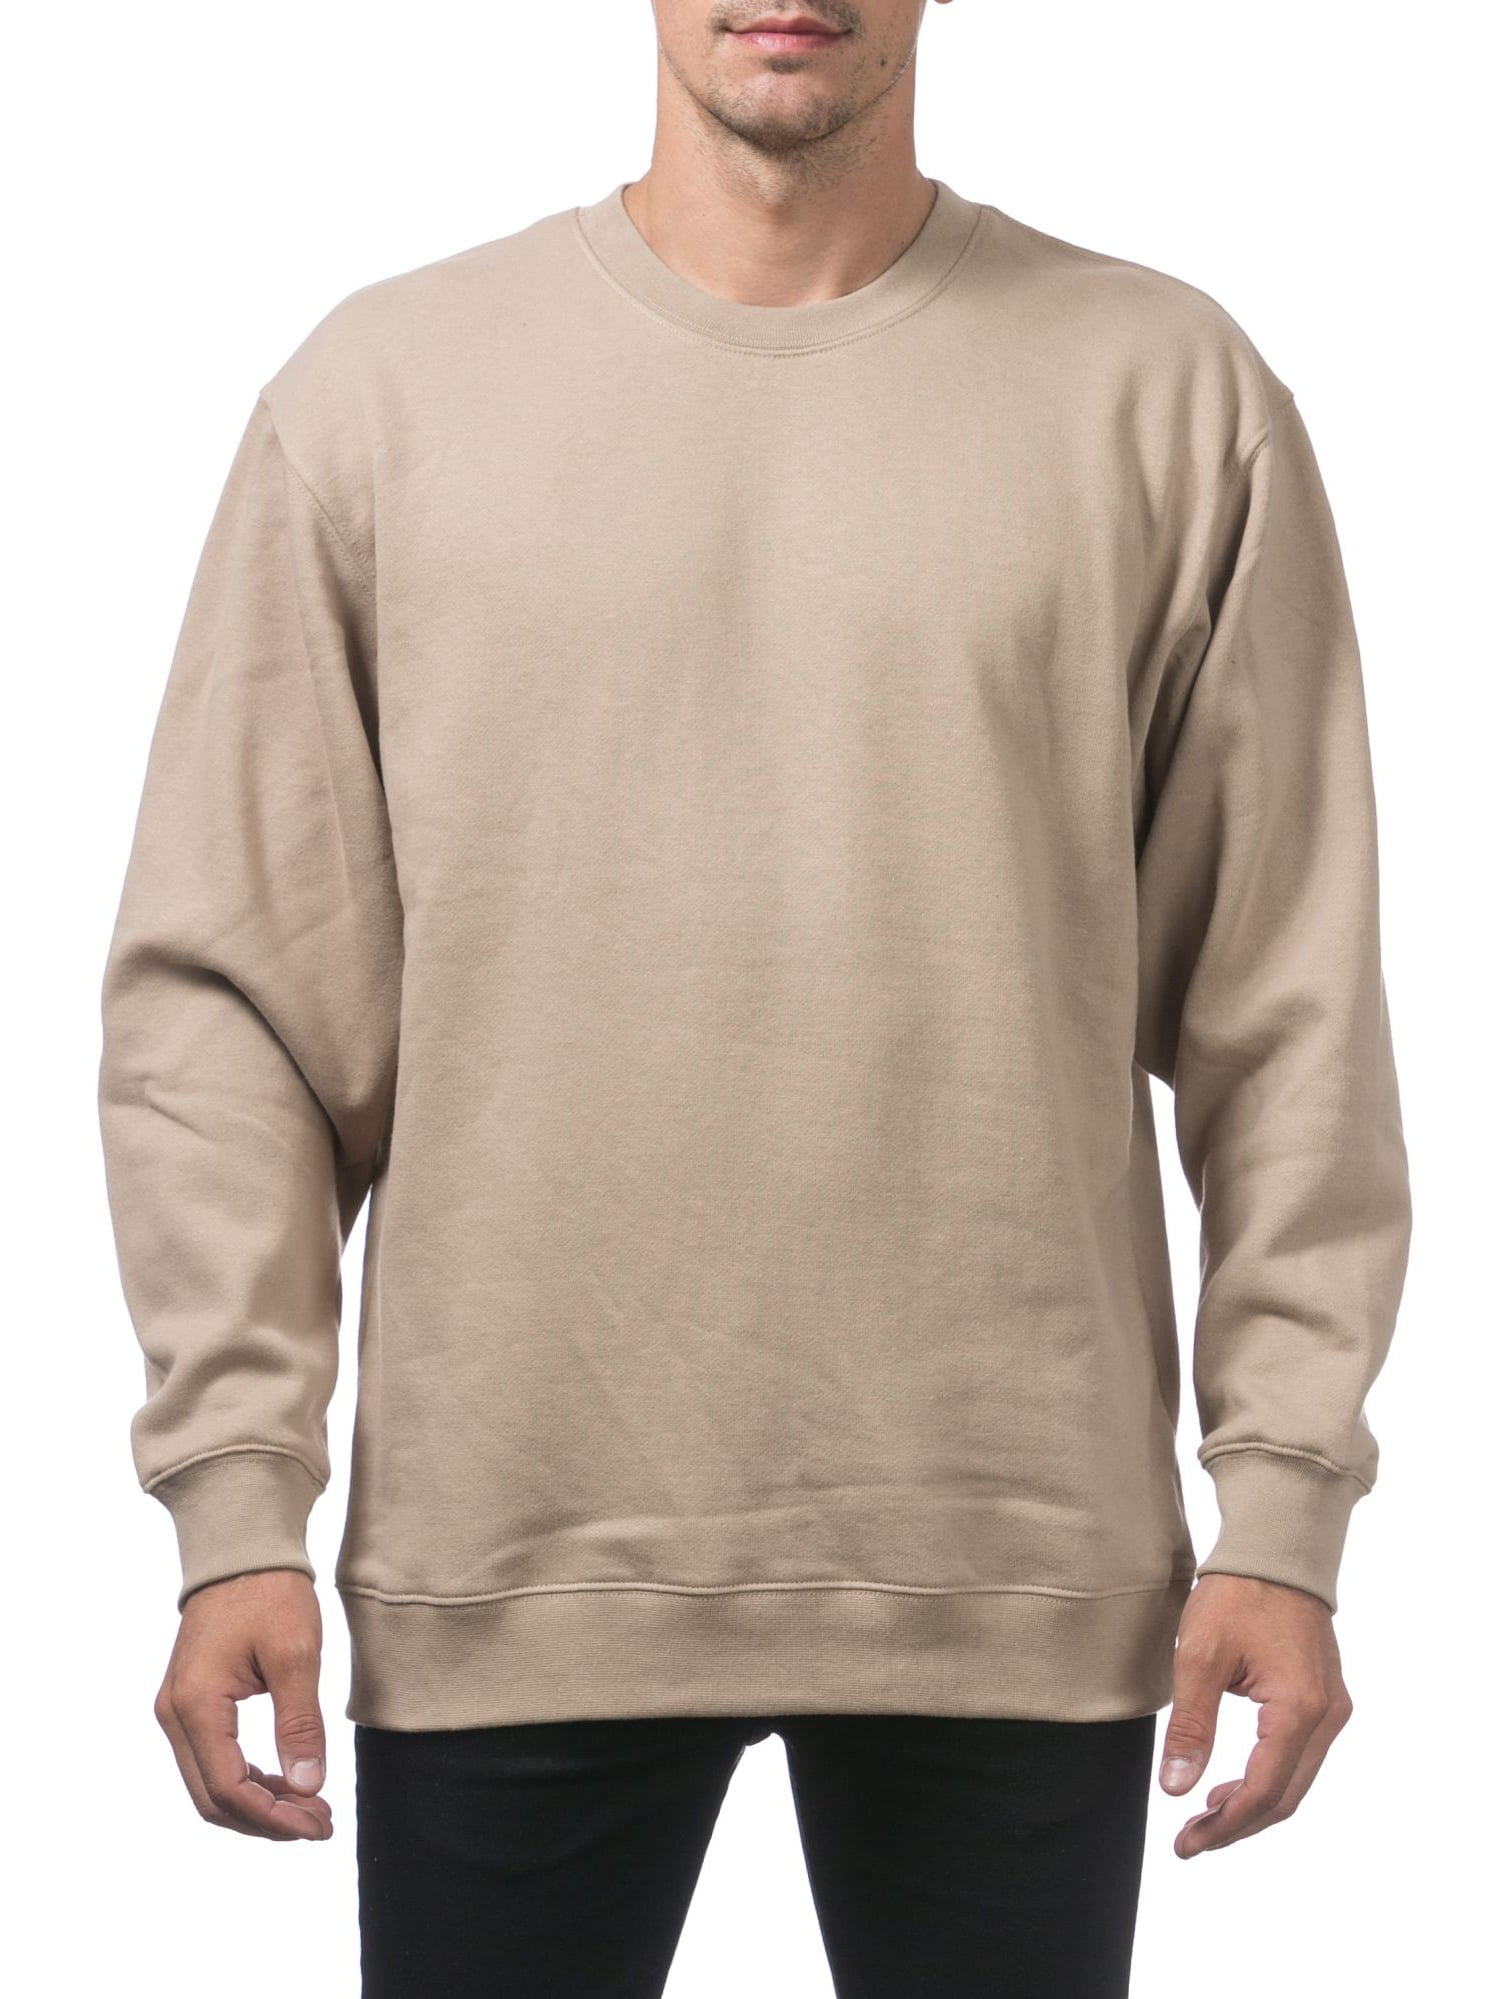 Download Pro Club Pro Club Men S Comfort Plain Blank Crew Neck Fleece Pullover Sweater 9oz Walmart Com Walmart Com